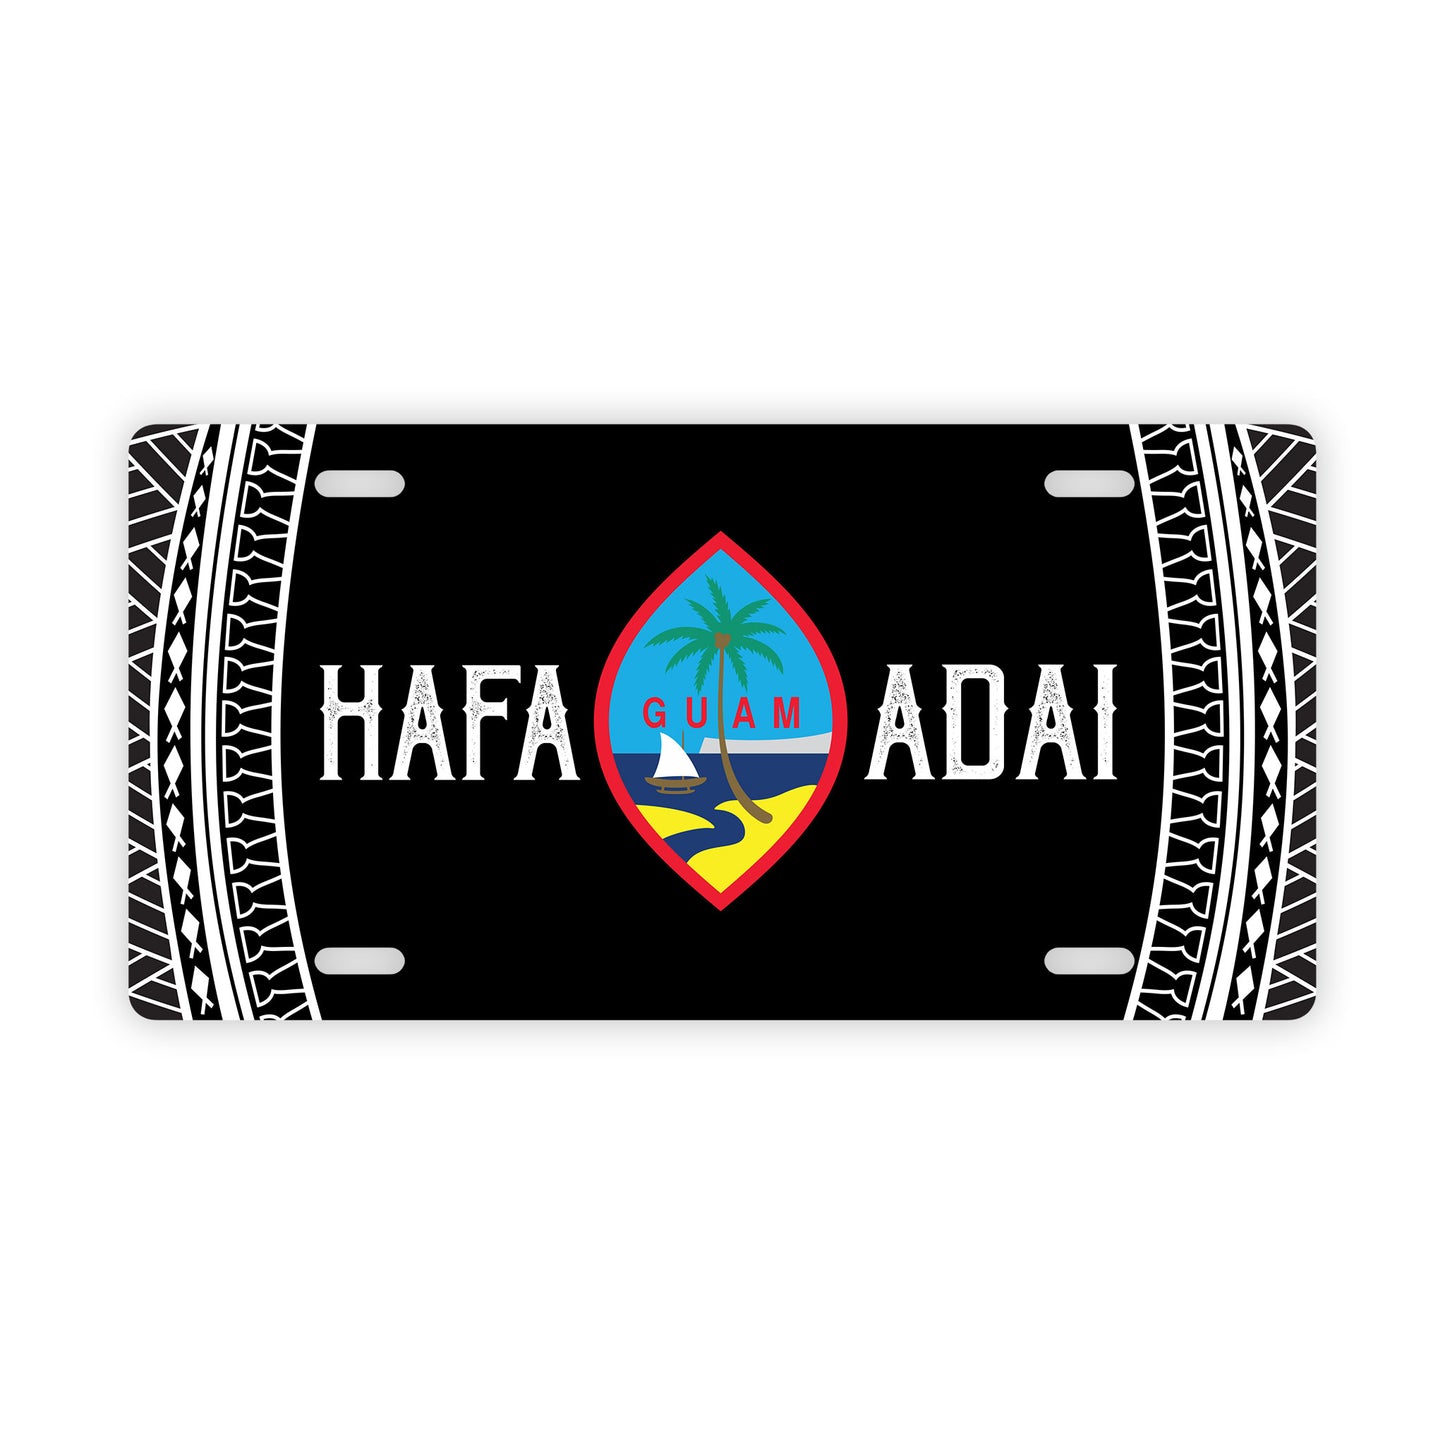 Hafa Adai Guam Tribal Black Car License Plate